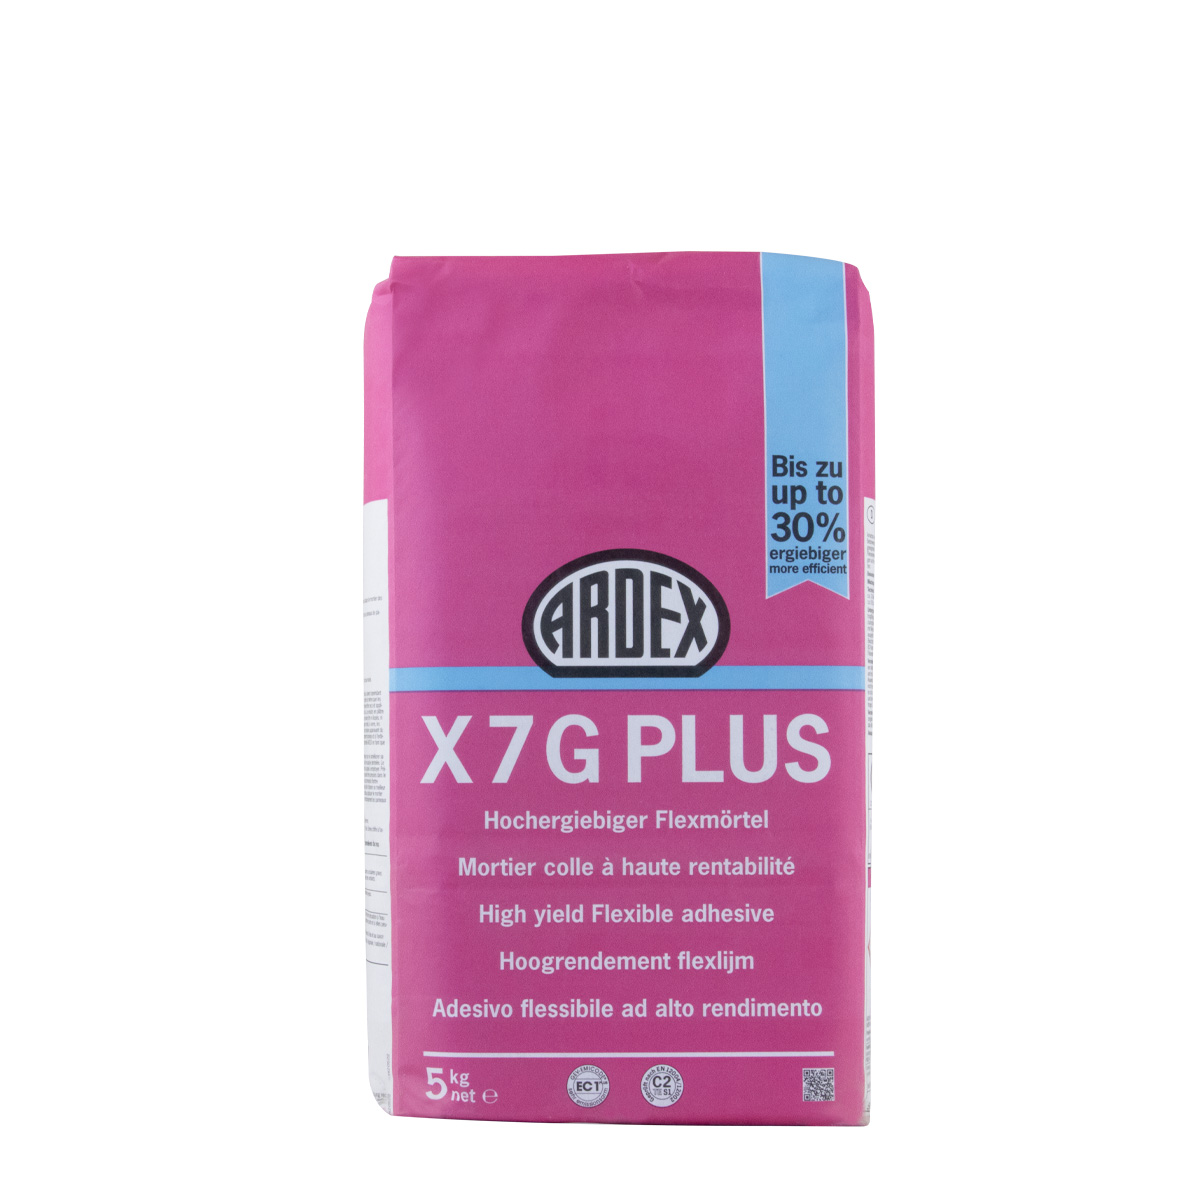 Ardex_X7G-Plus_5kg_gross